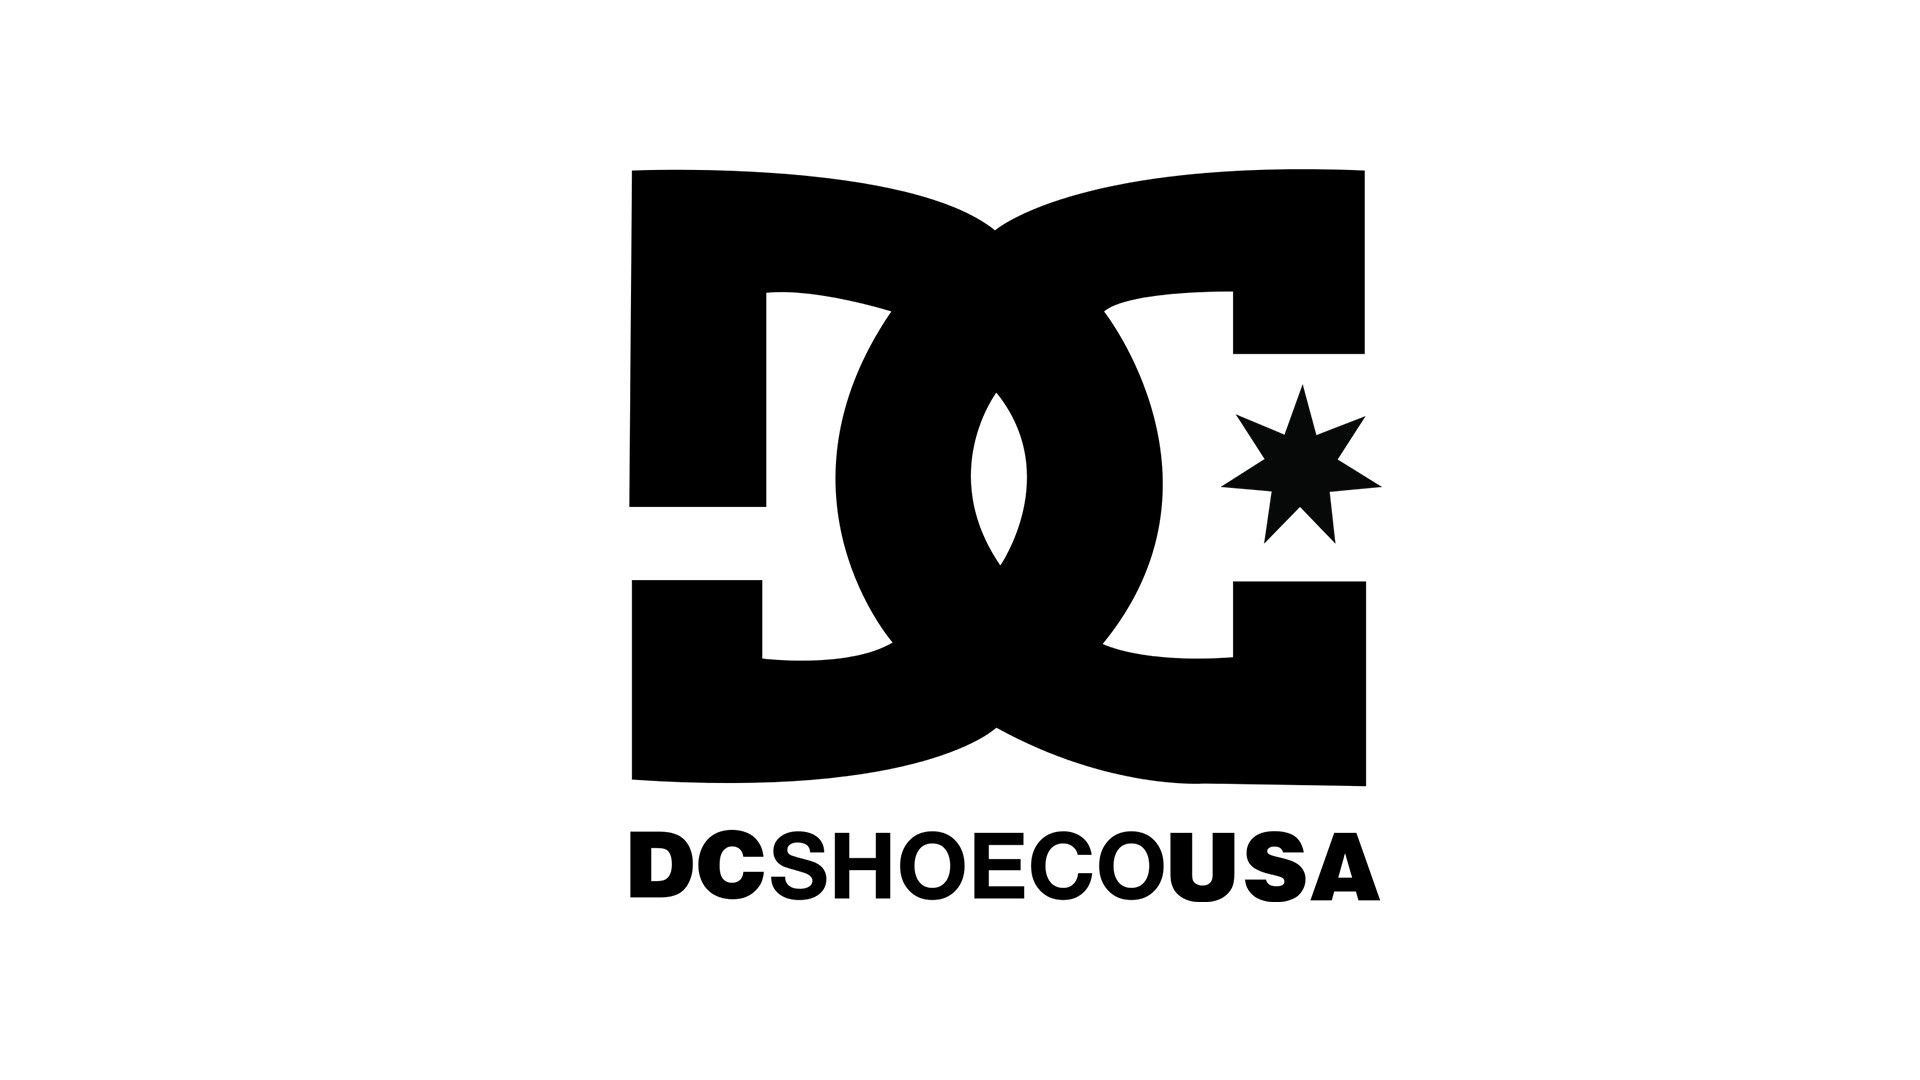 DC Skate Logo Wallpapers on WallpaperDog